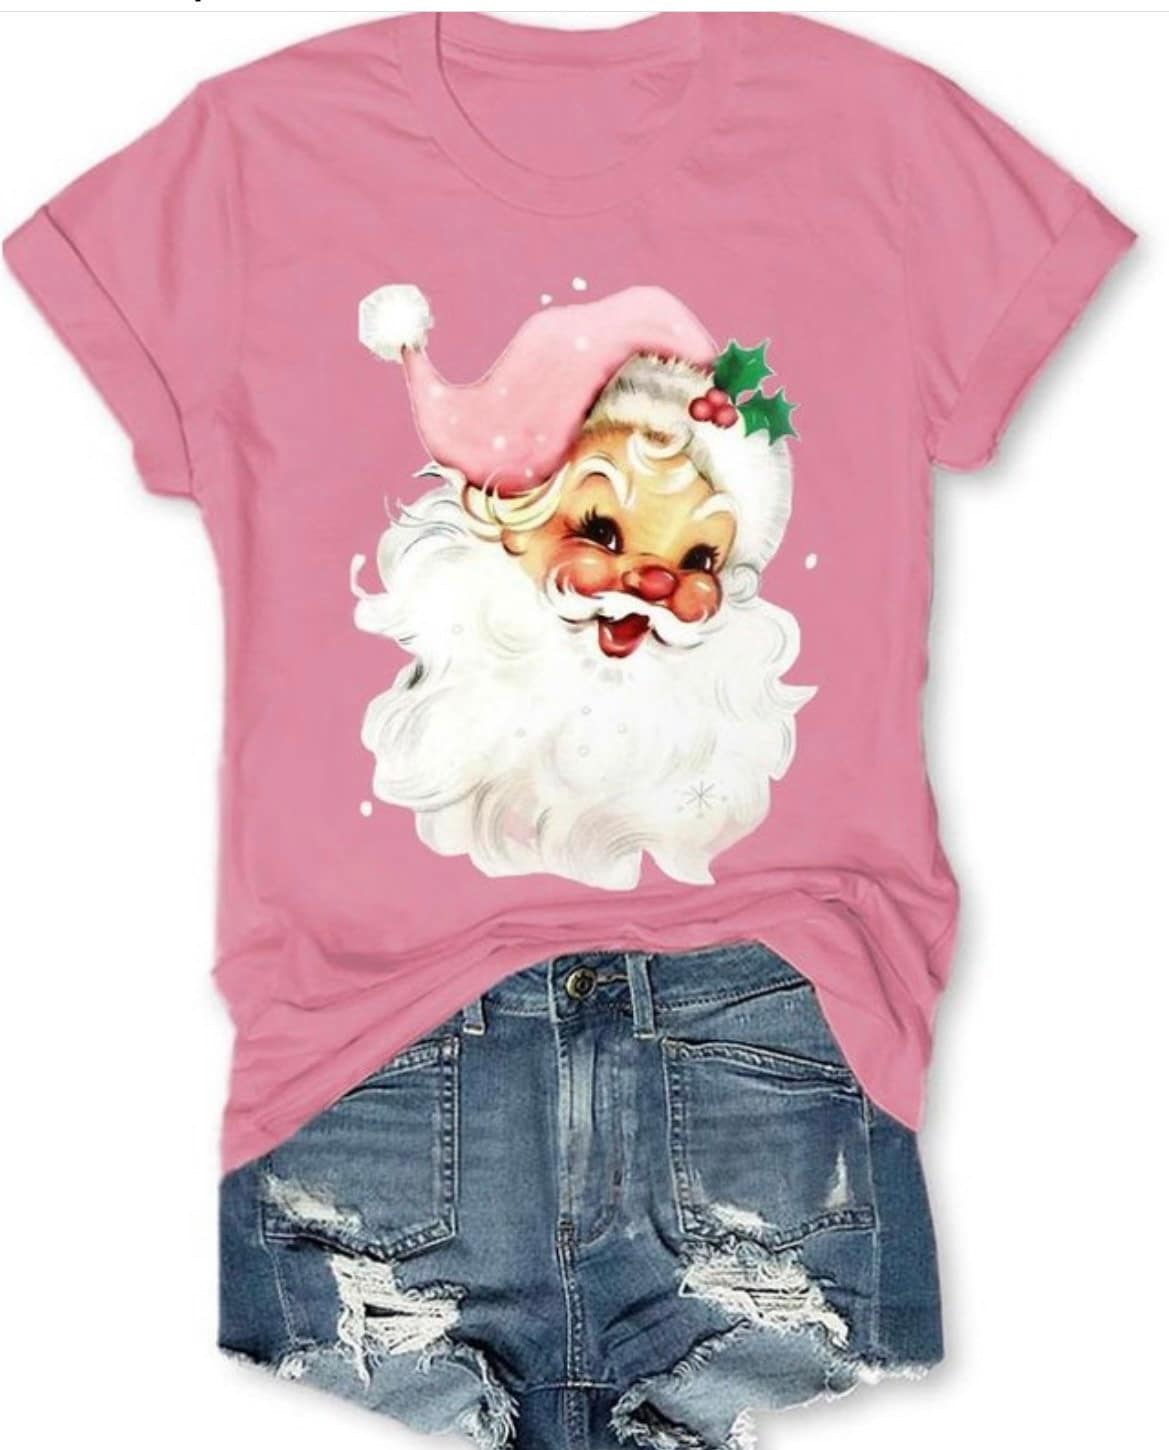 Vintage Santa T Shirt, Retro Christmas T Shirt, Pink Santa Shirt